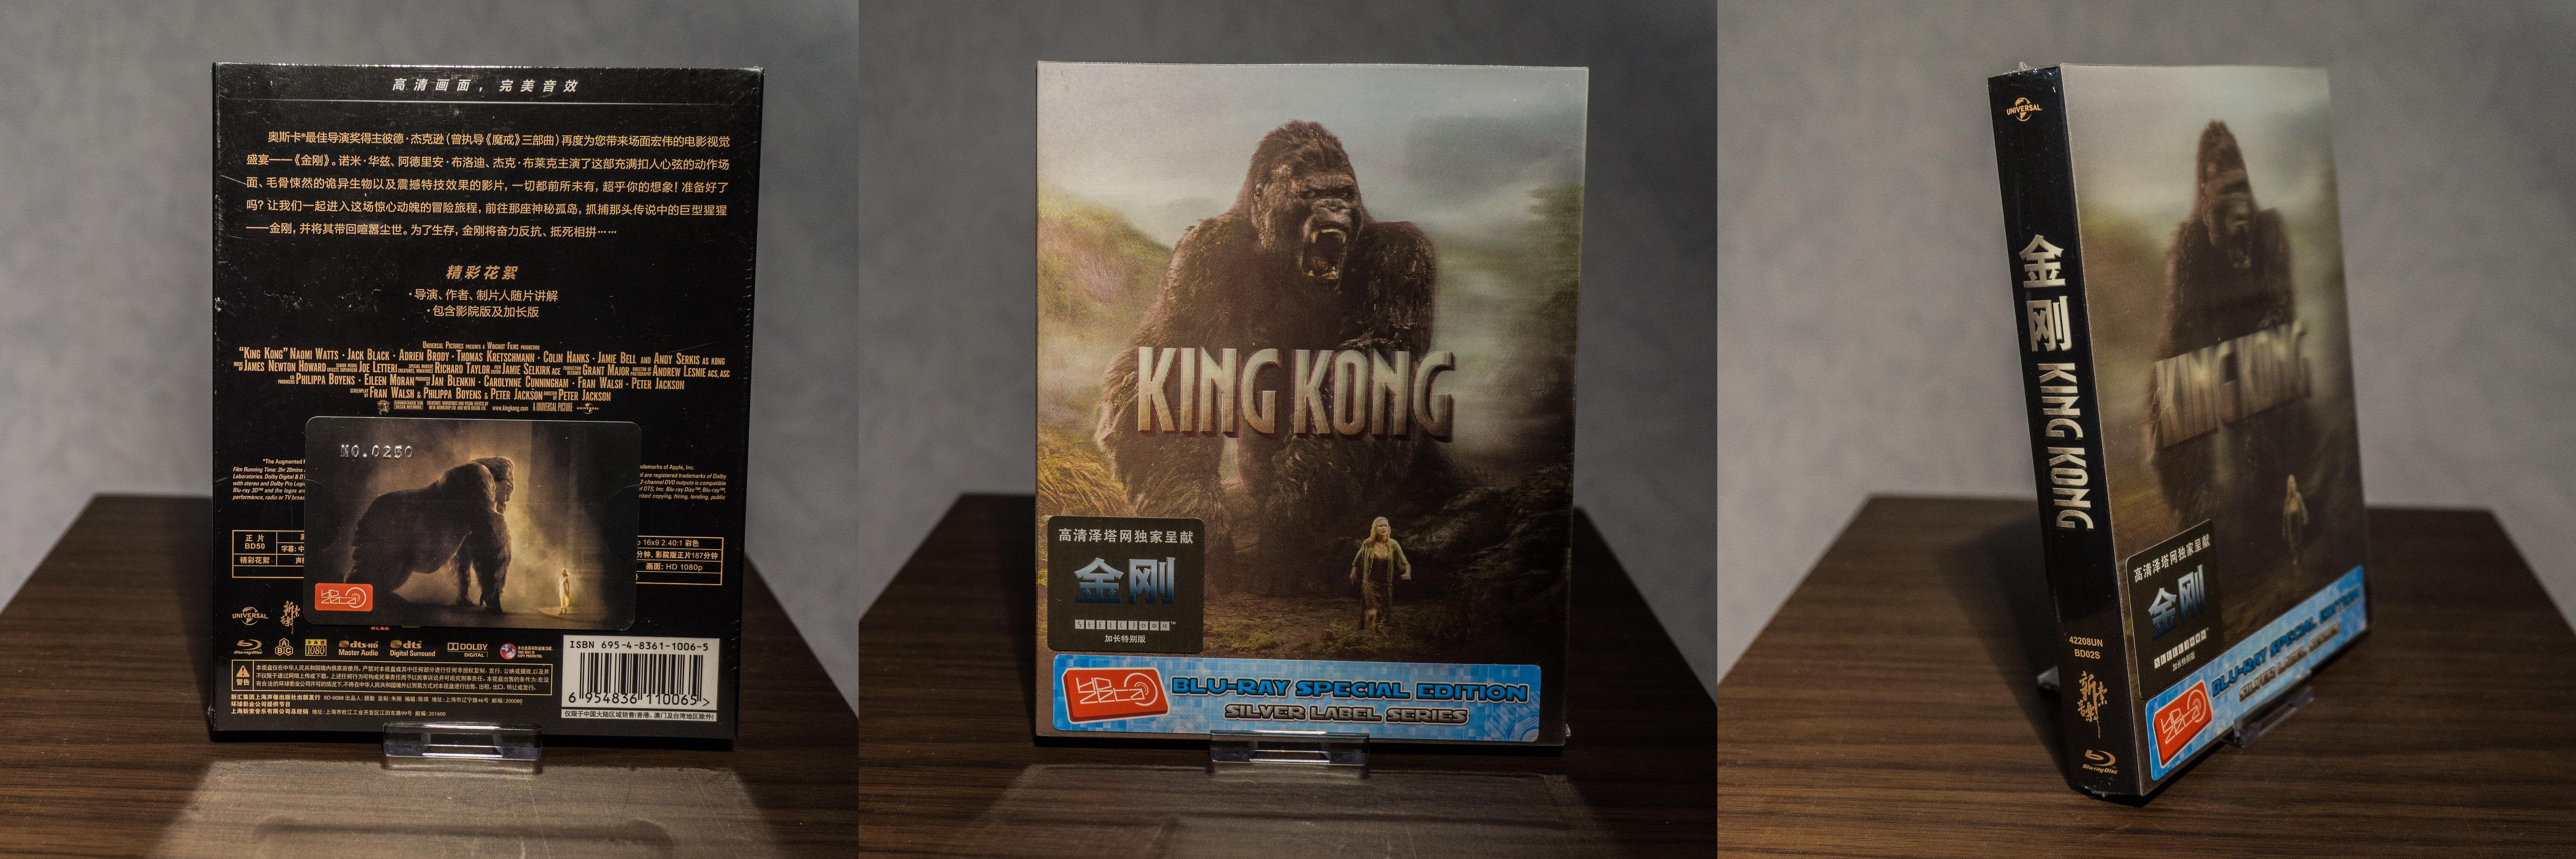 King Kong Lenticular Steelbook HD Zeta